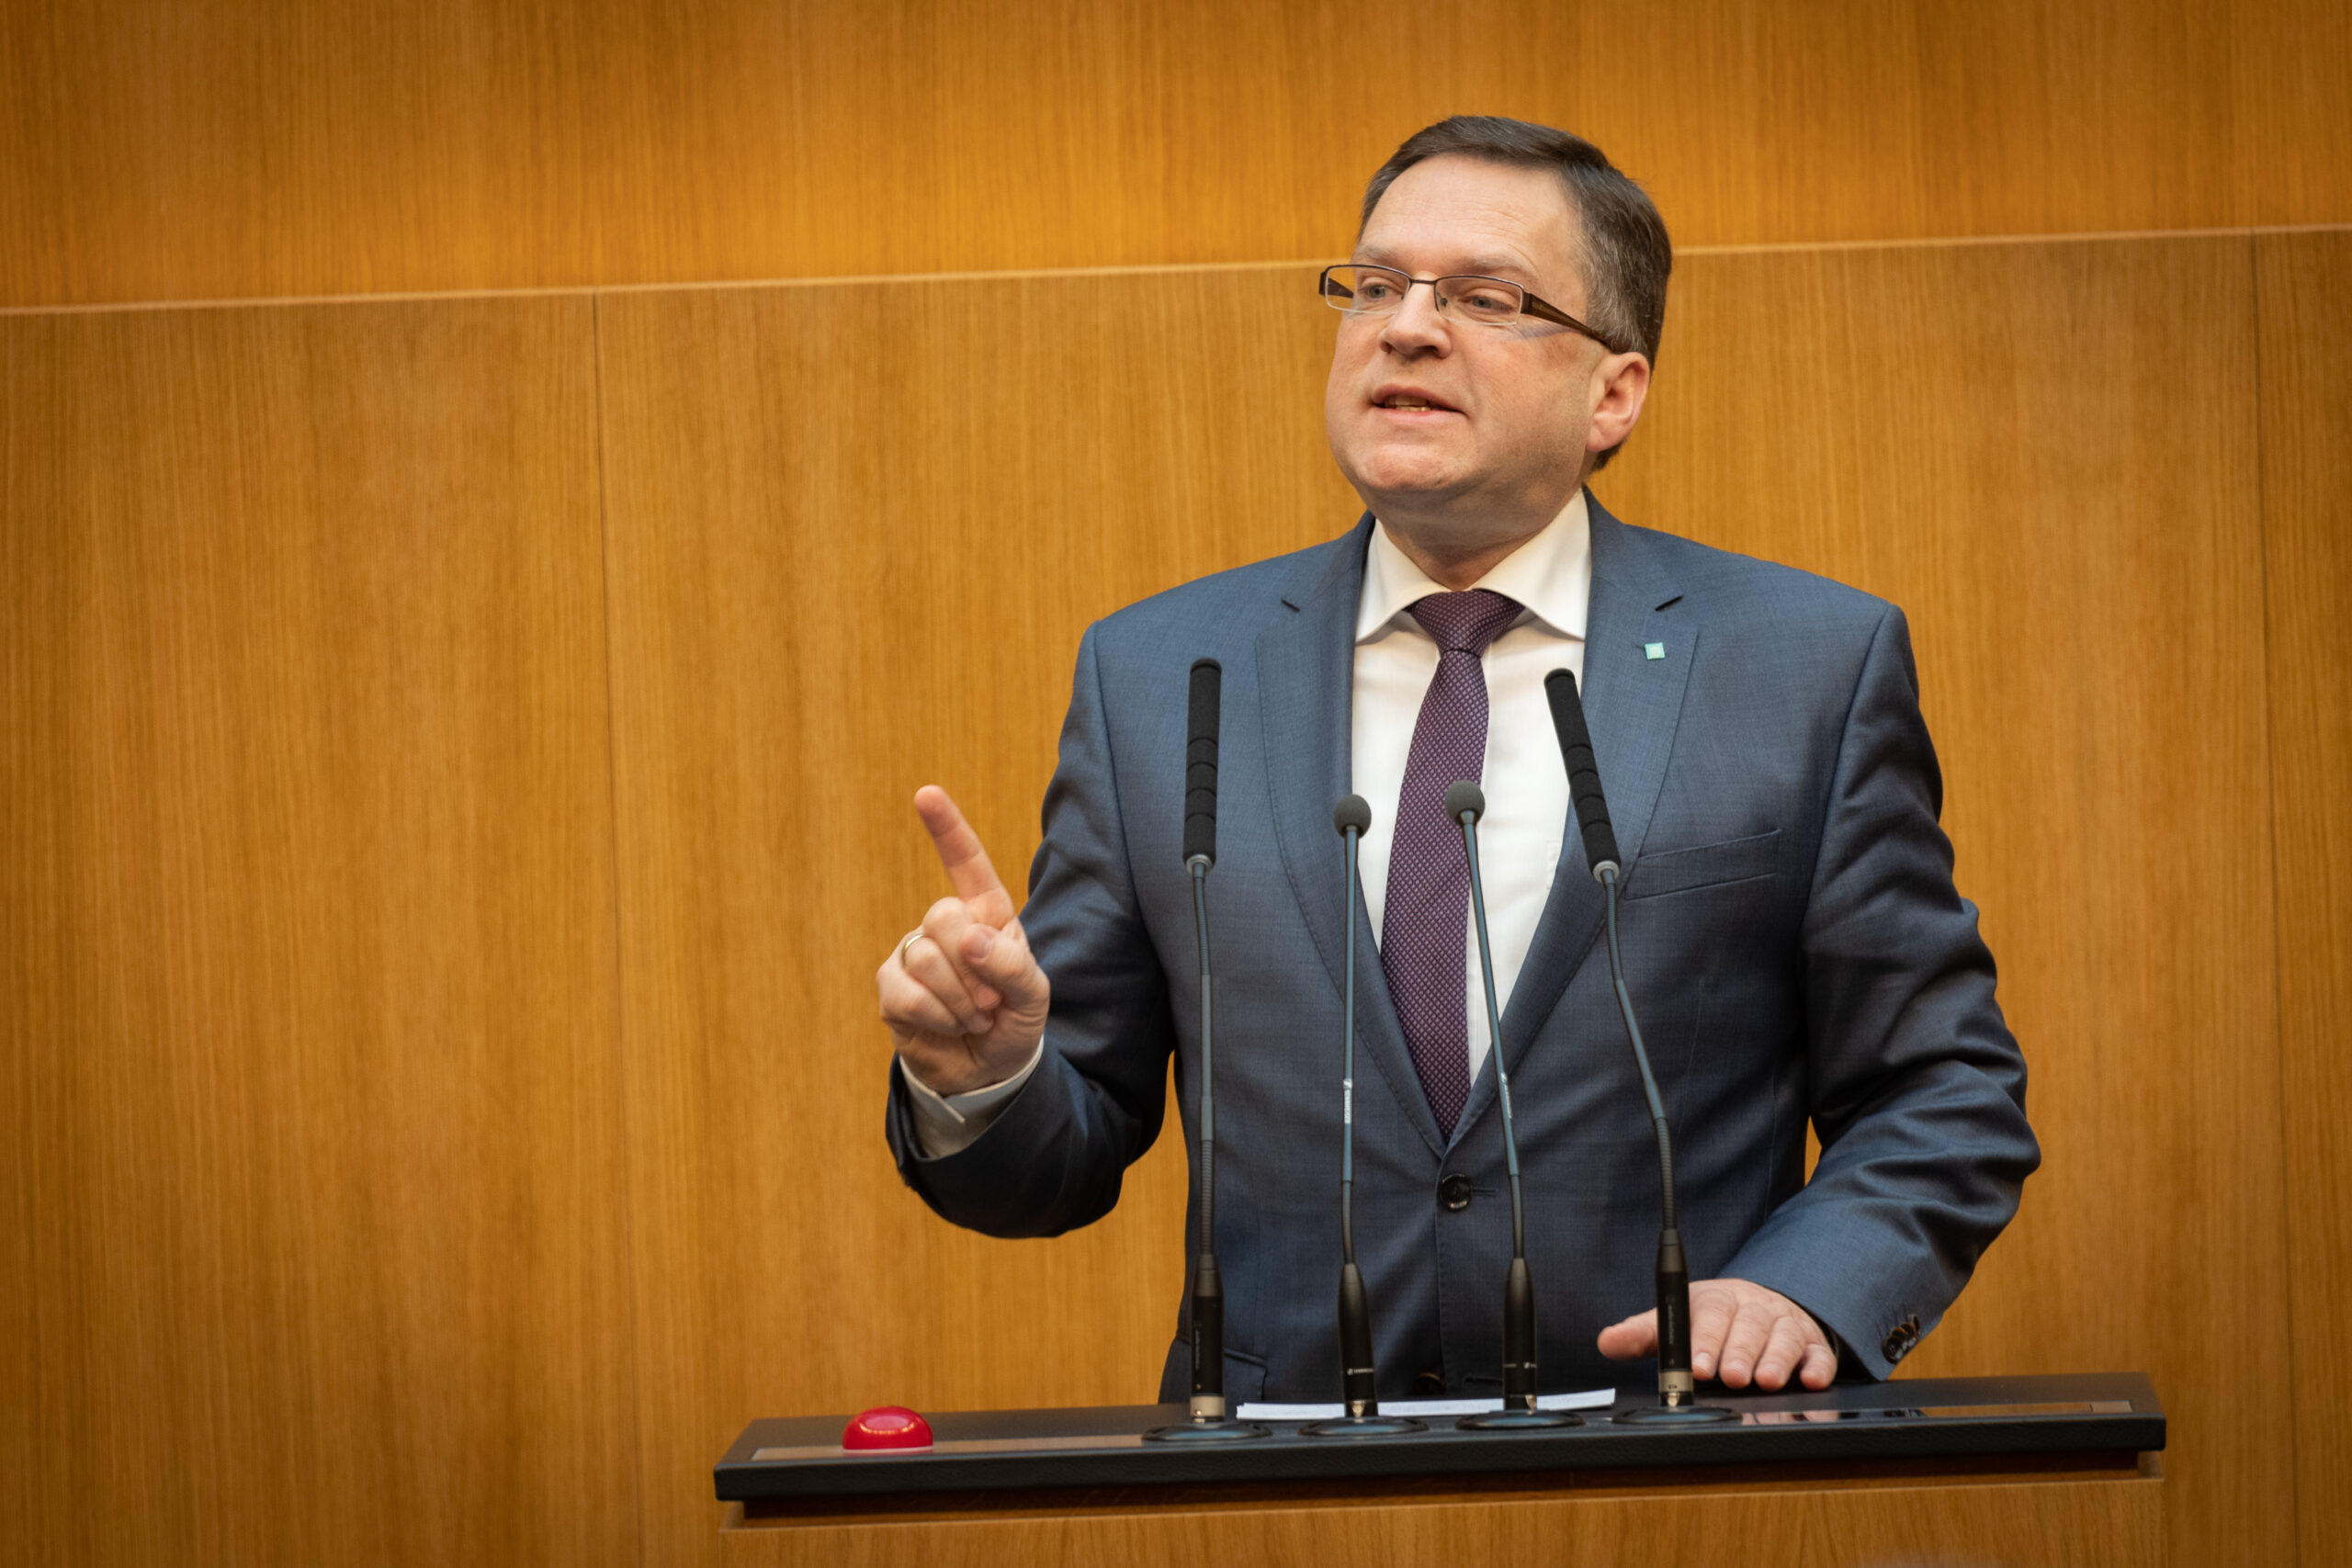 ÖVP-Klubobmannn August Wöginger stellt klar: Aktuell ist kein Untersuchungsausschuss geplant. Foto: Parlament/Ulrike Wieser